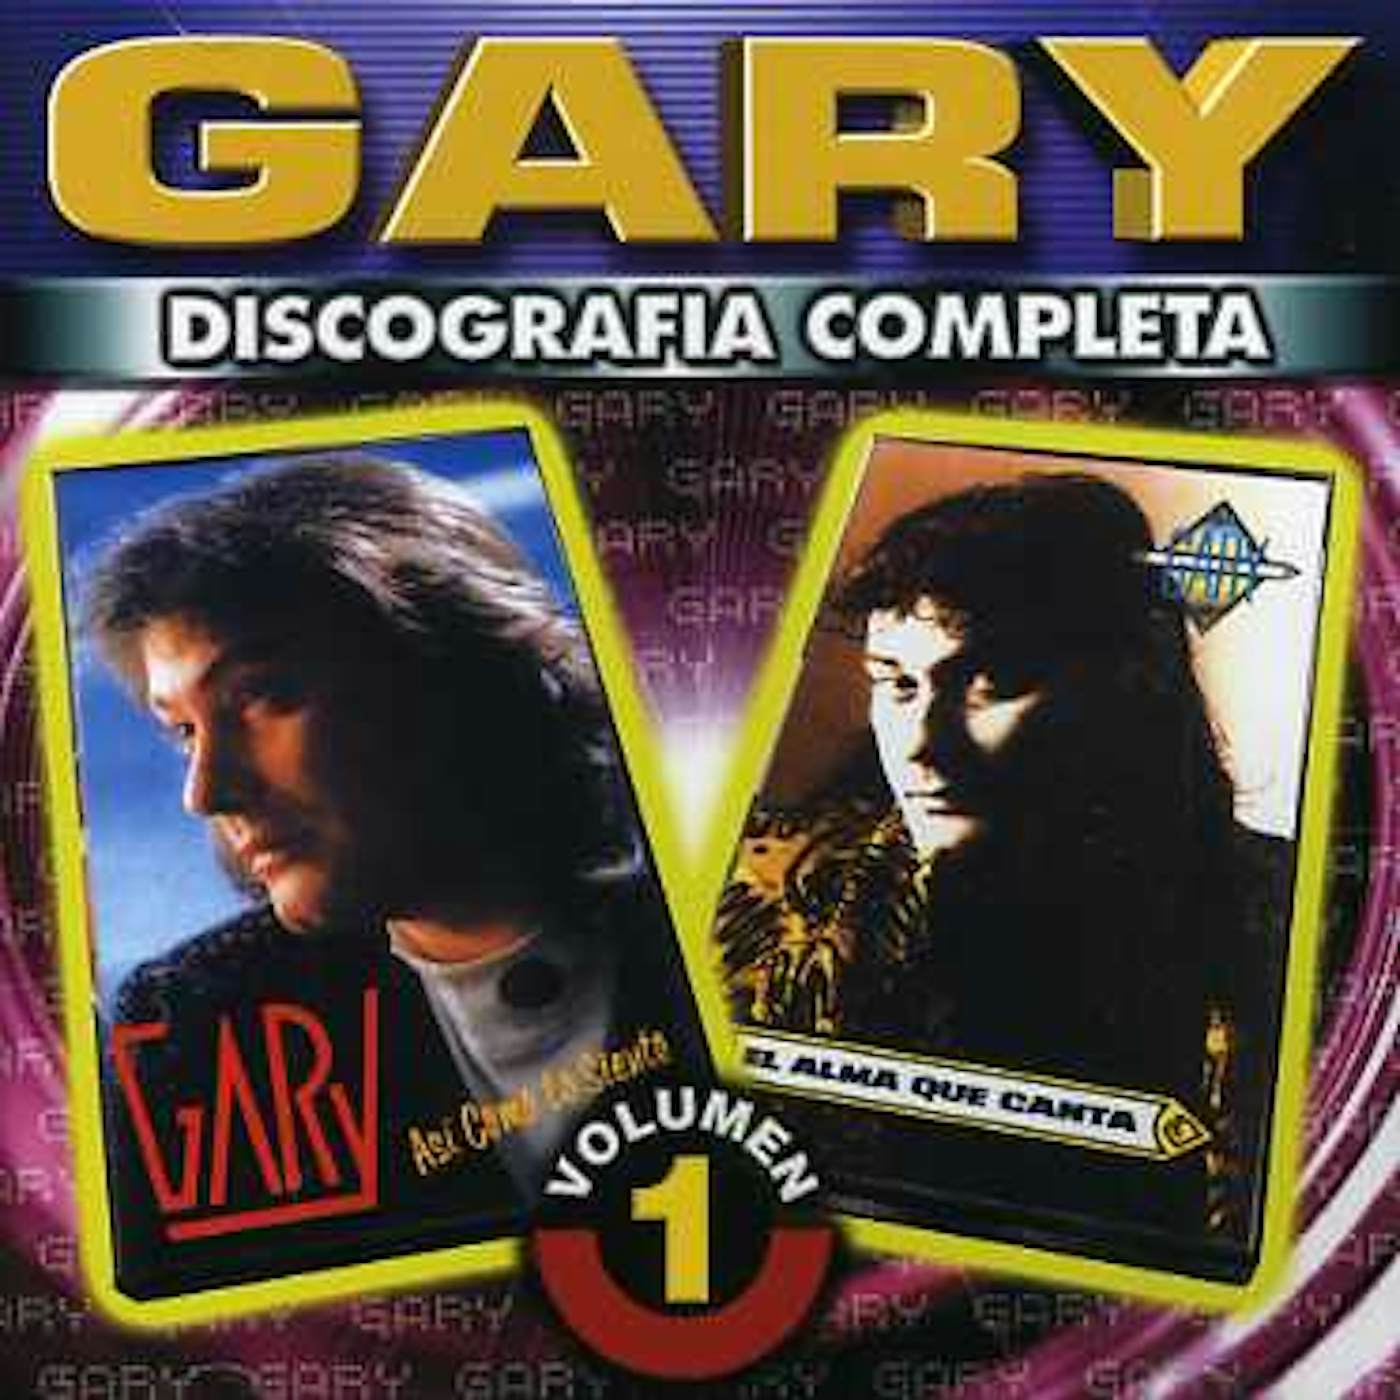 GARY DISCOGRAFIA COMPLETA 1 CD